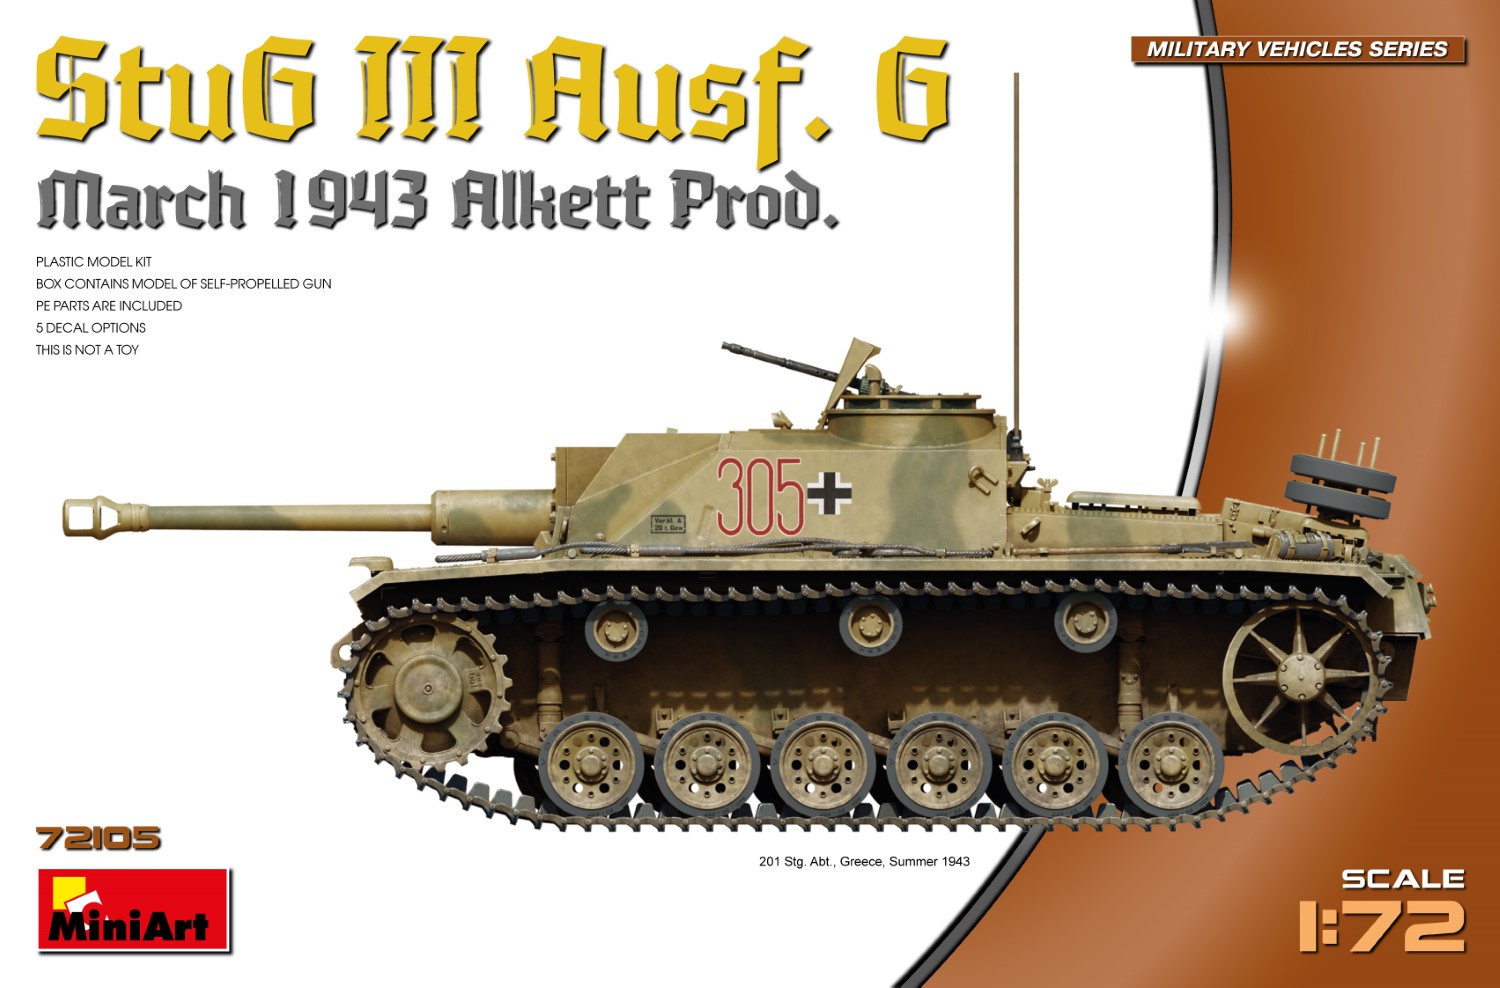 StuG III Ausf.G Alkett - March 1943